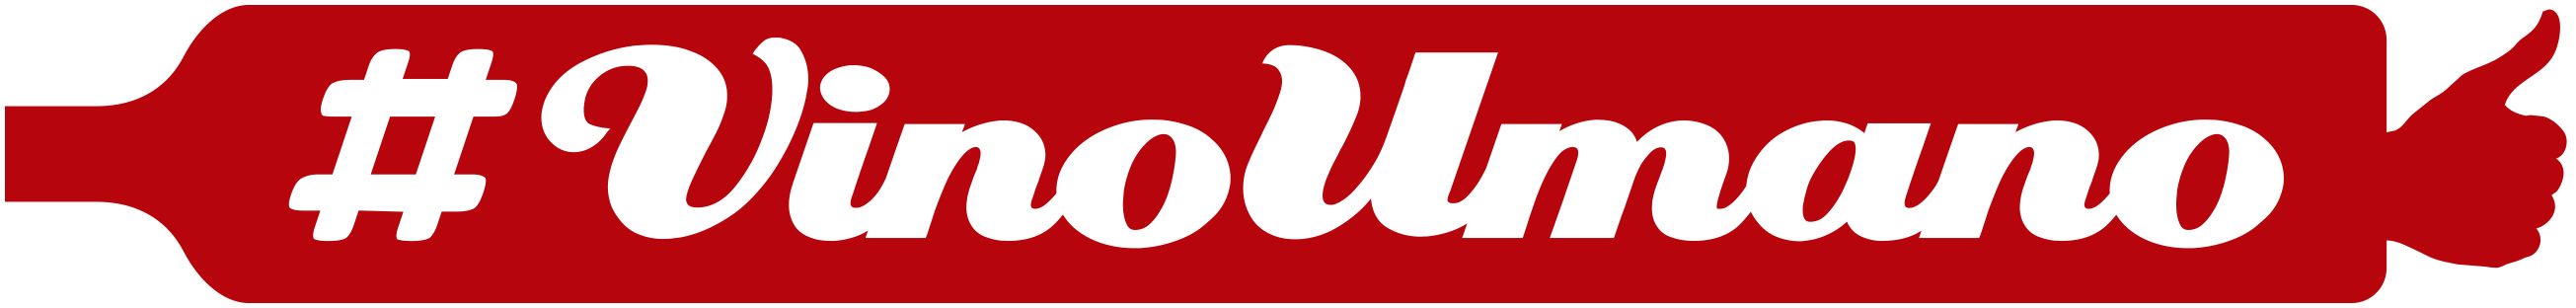 vinoumano logo-marchio rosso